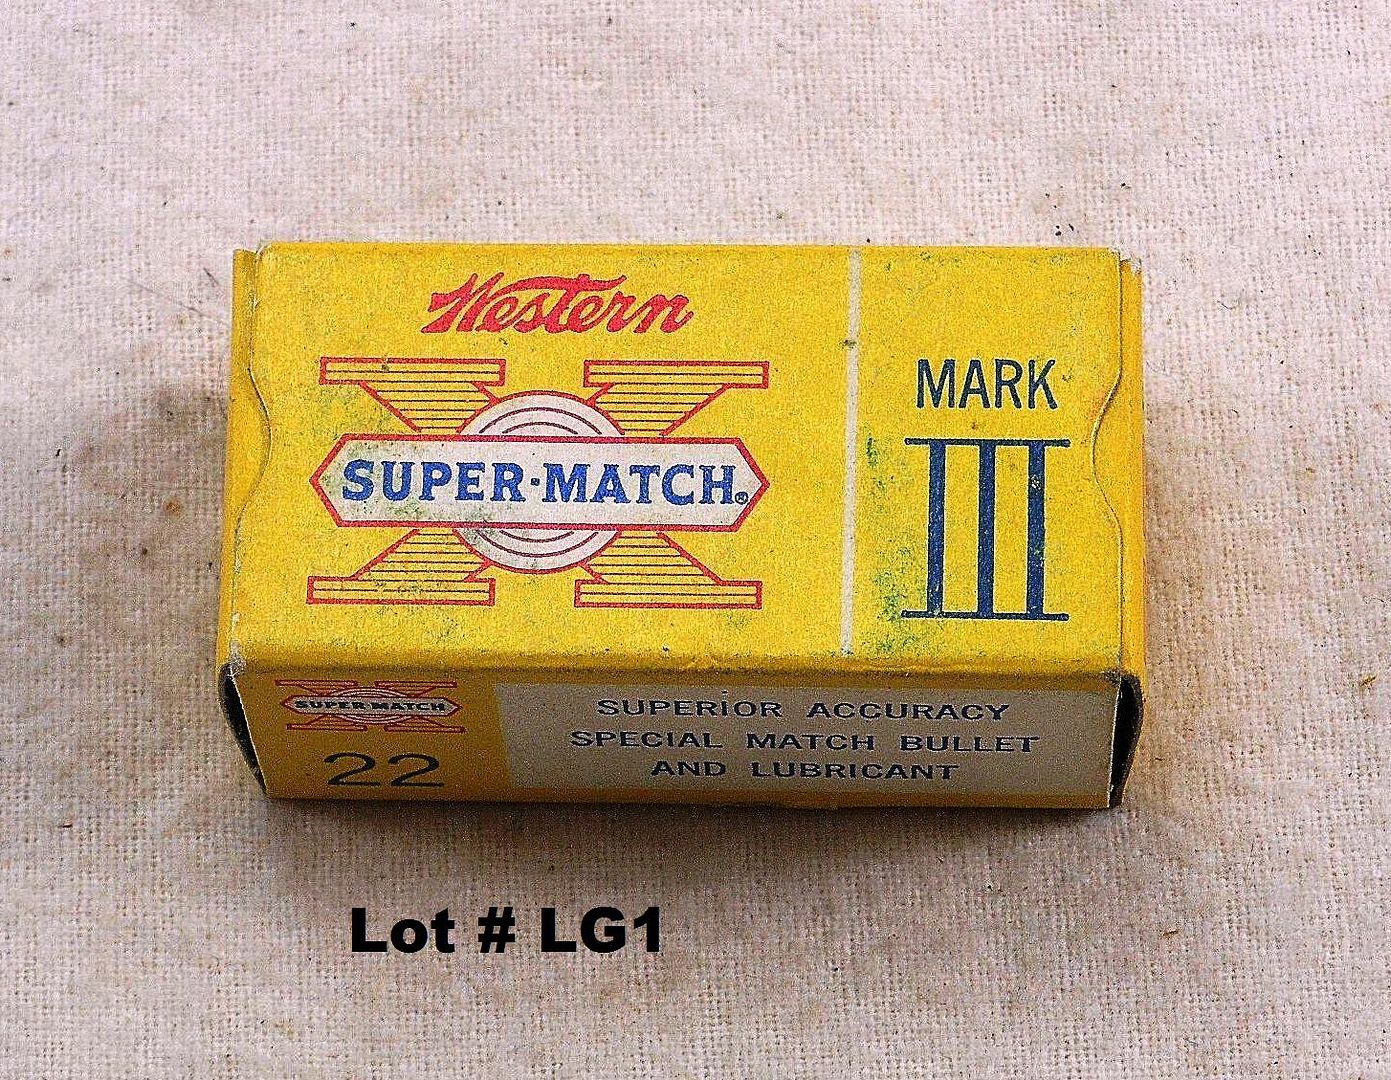 Western-Cartridge-Co-Super-Match-Mark-111-22-Long-Rifle_100954910_51511_8FD4C4790A427054_1.jpg